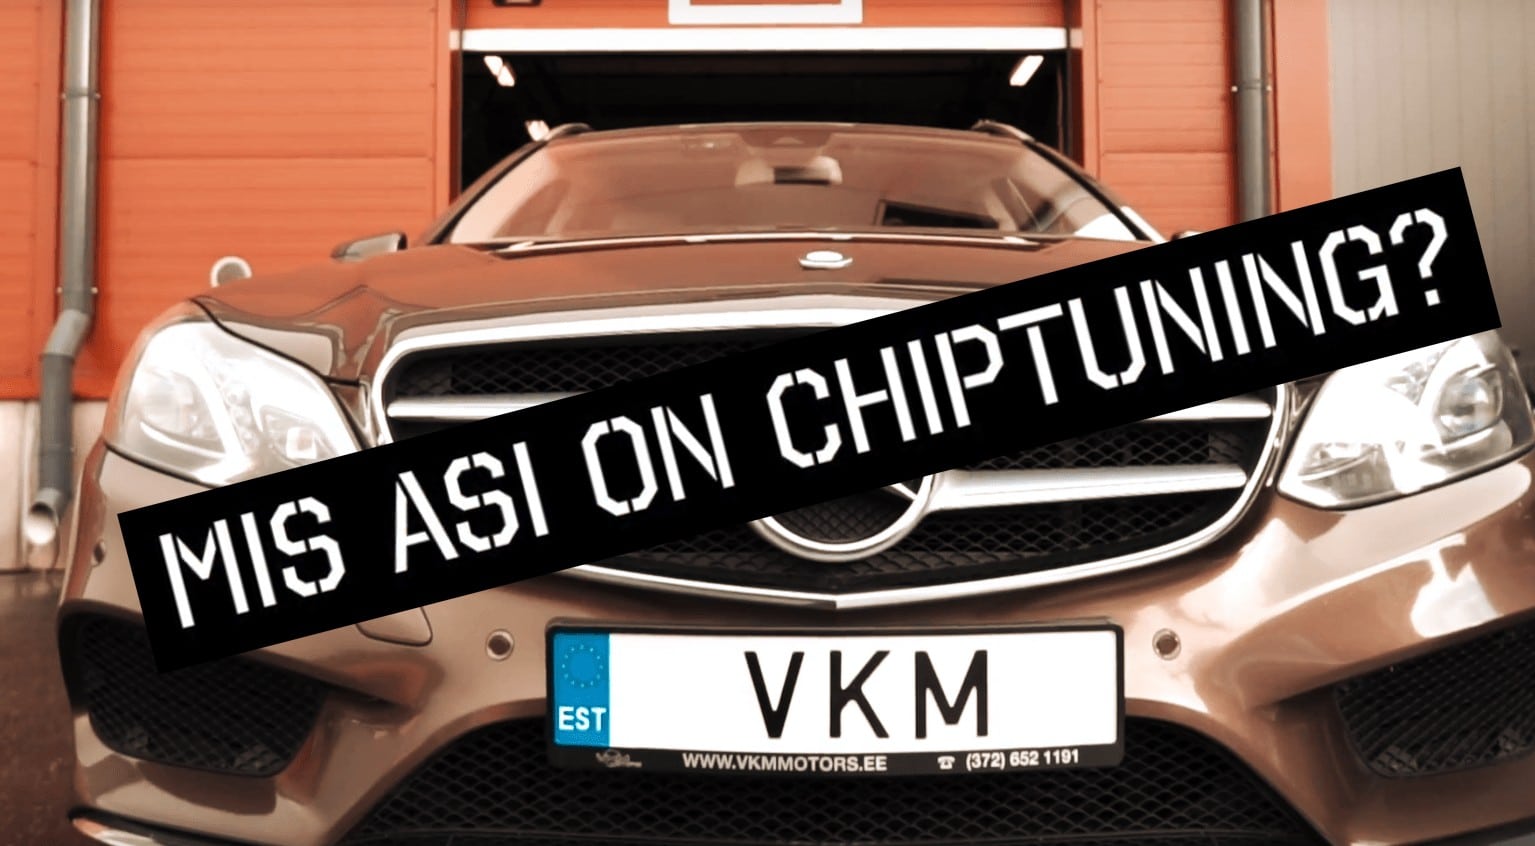 Chip tuning - VKM Motors